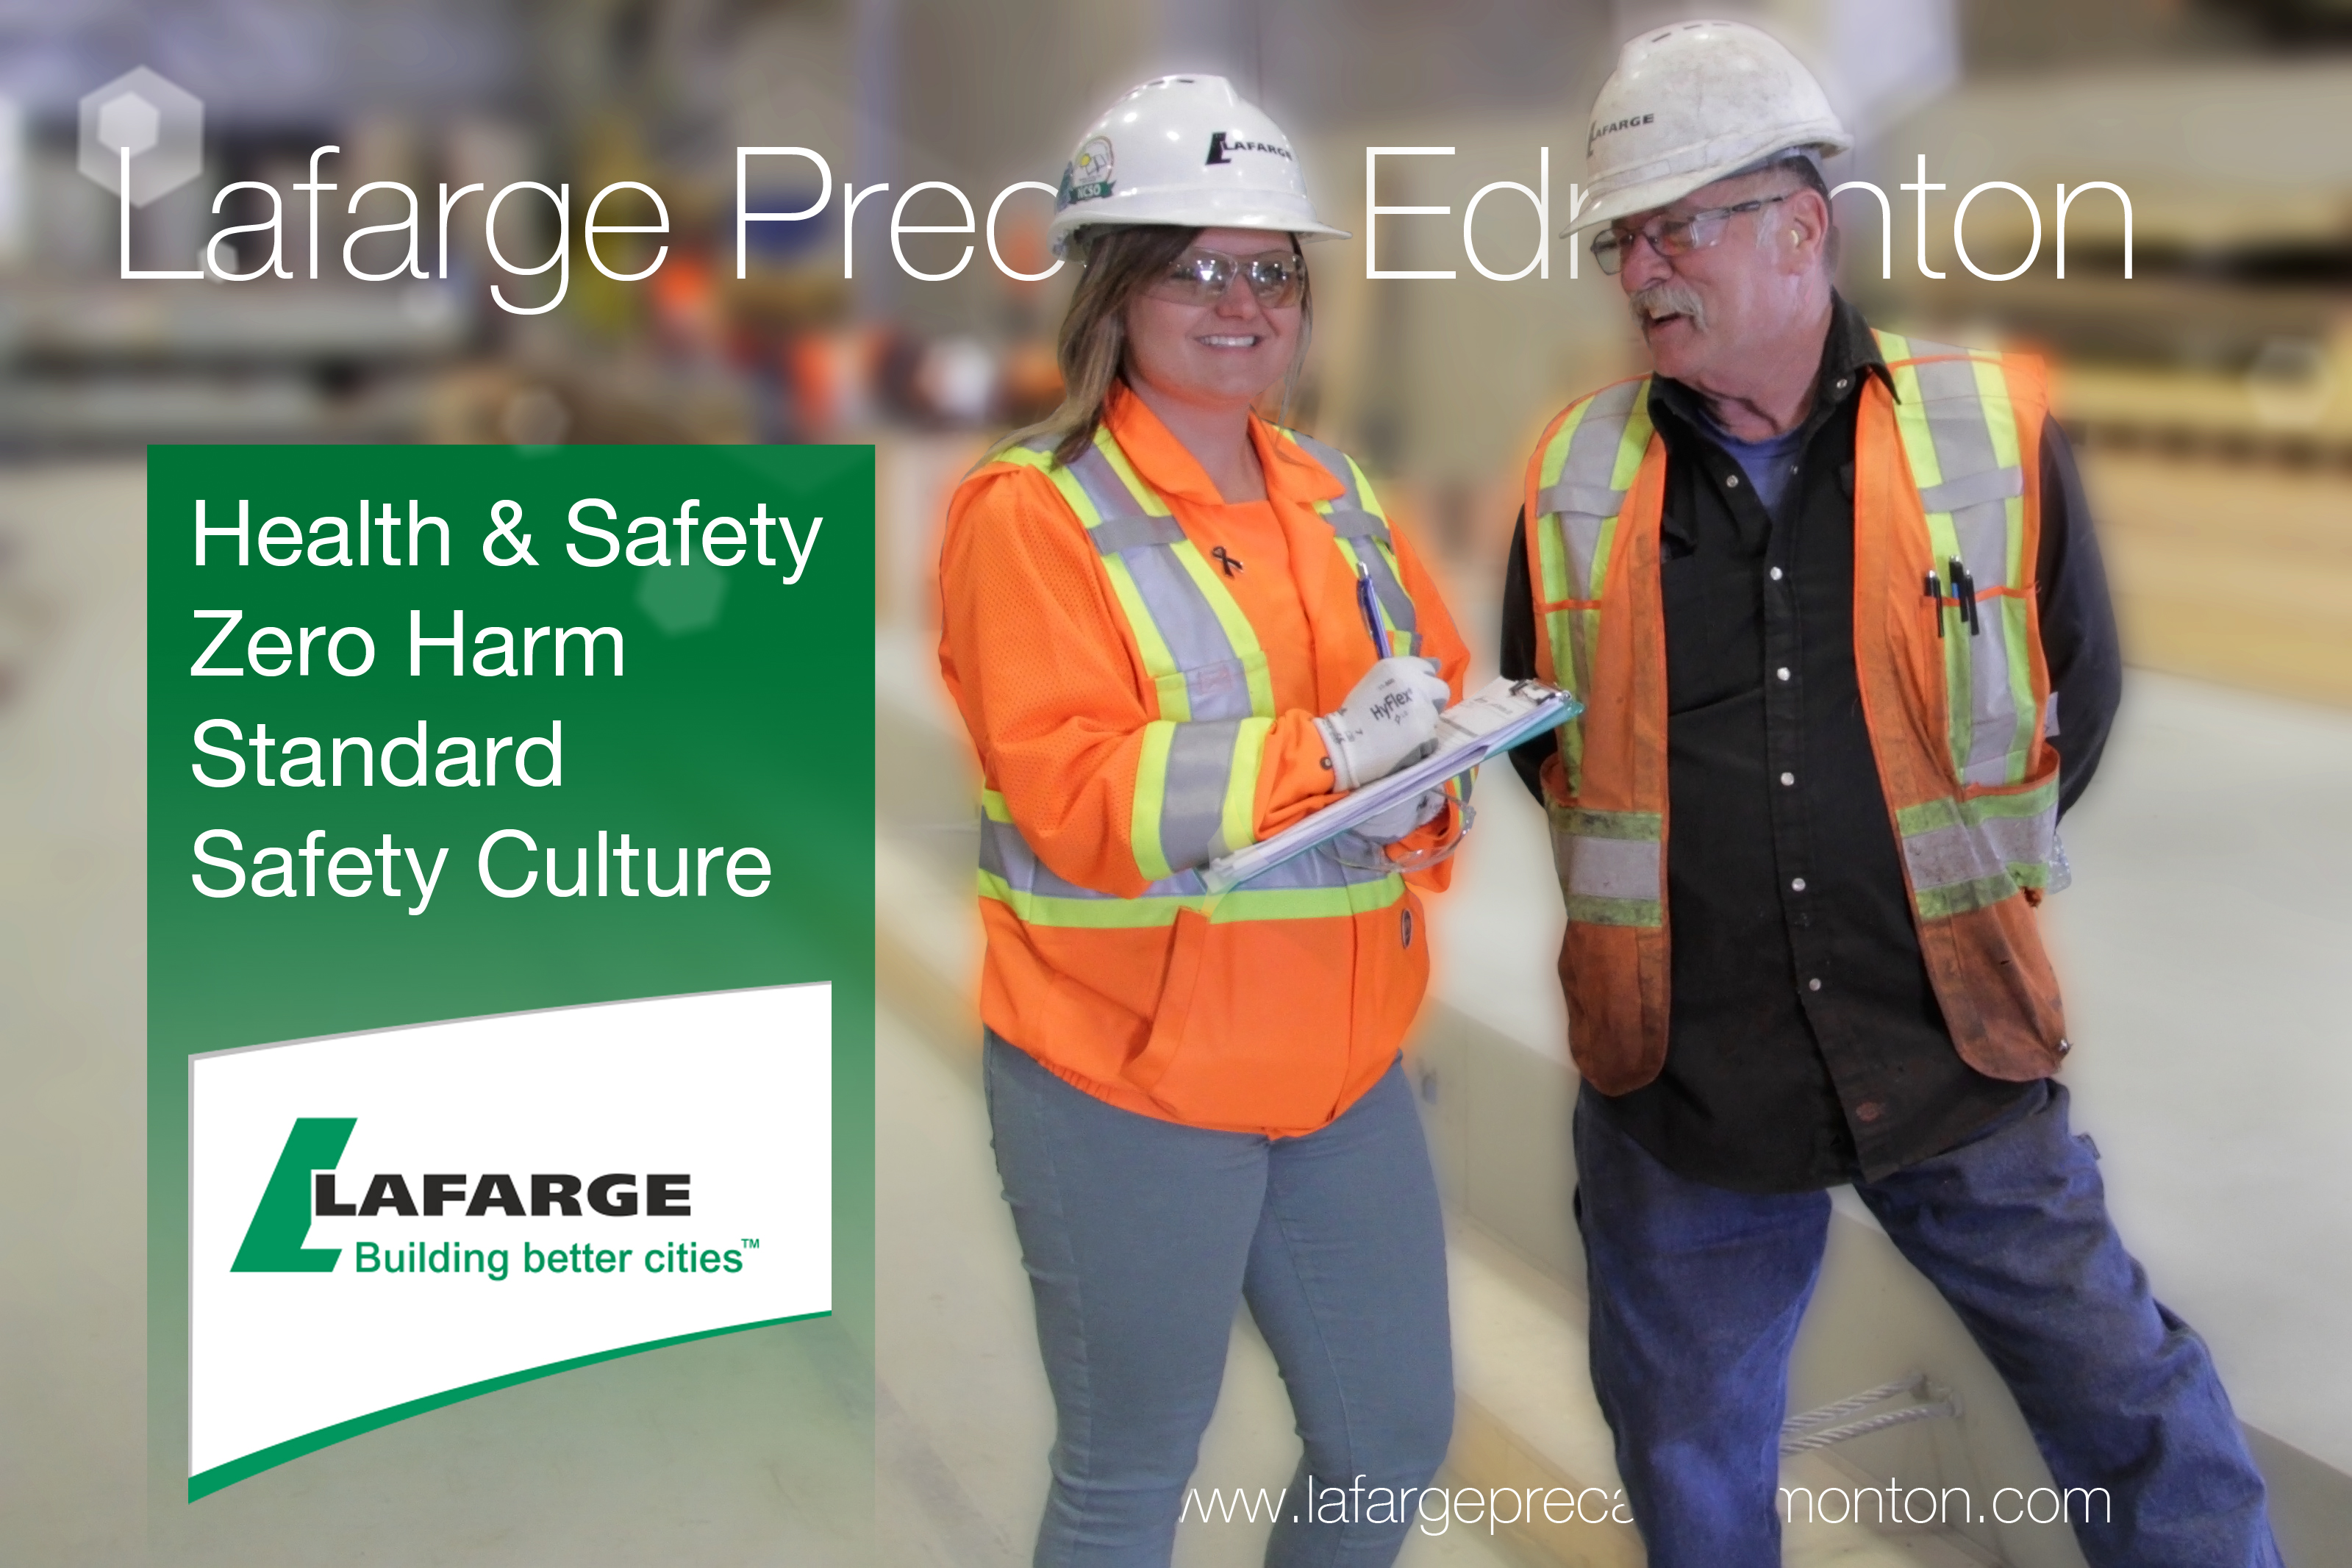 Lafarge precast edmonton cement quality control Safety Zero Harm